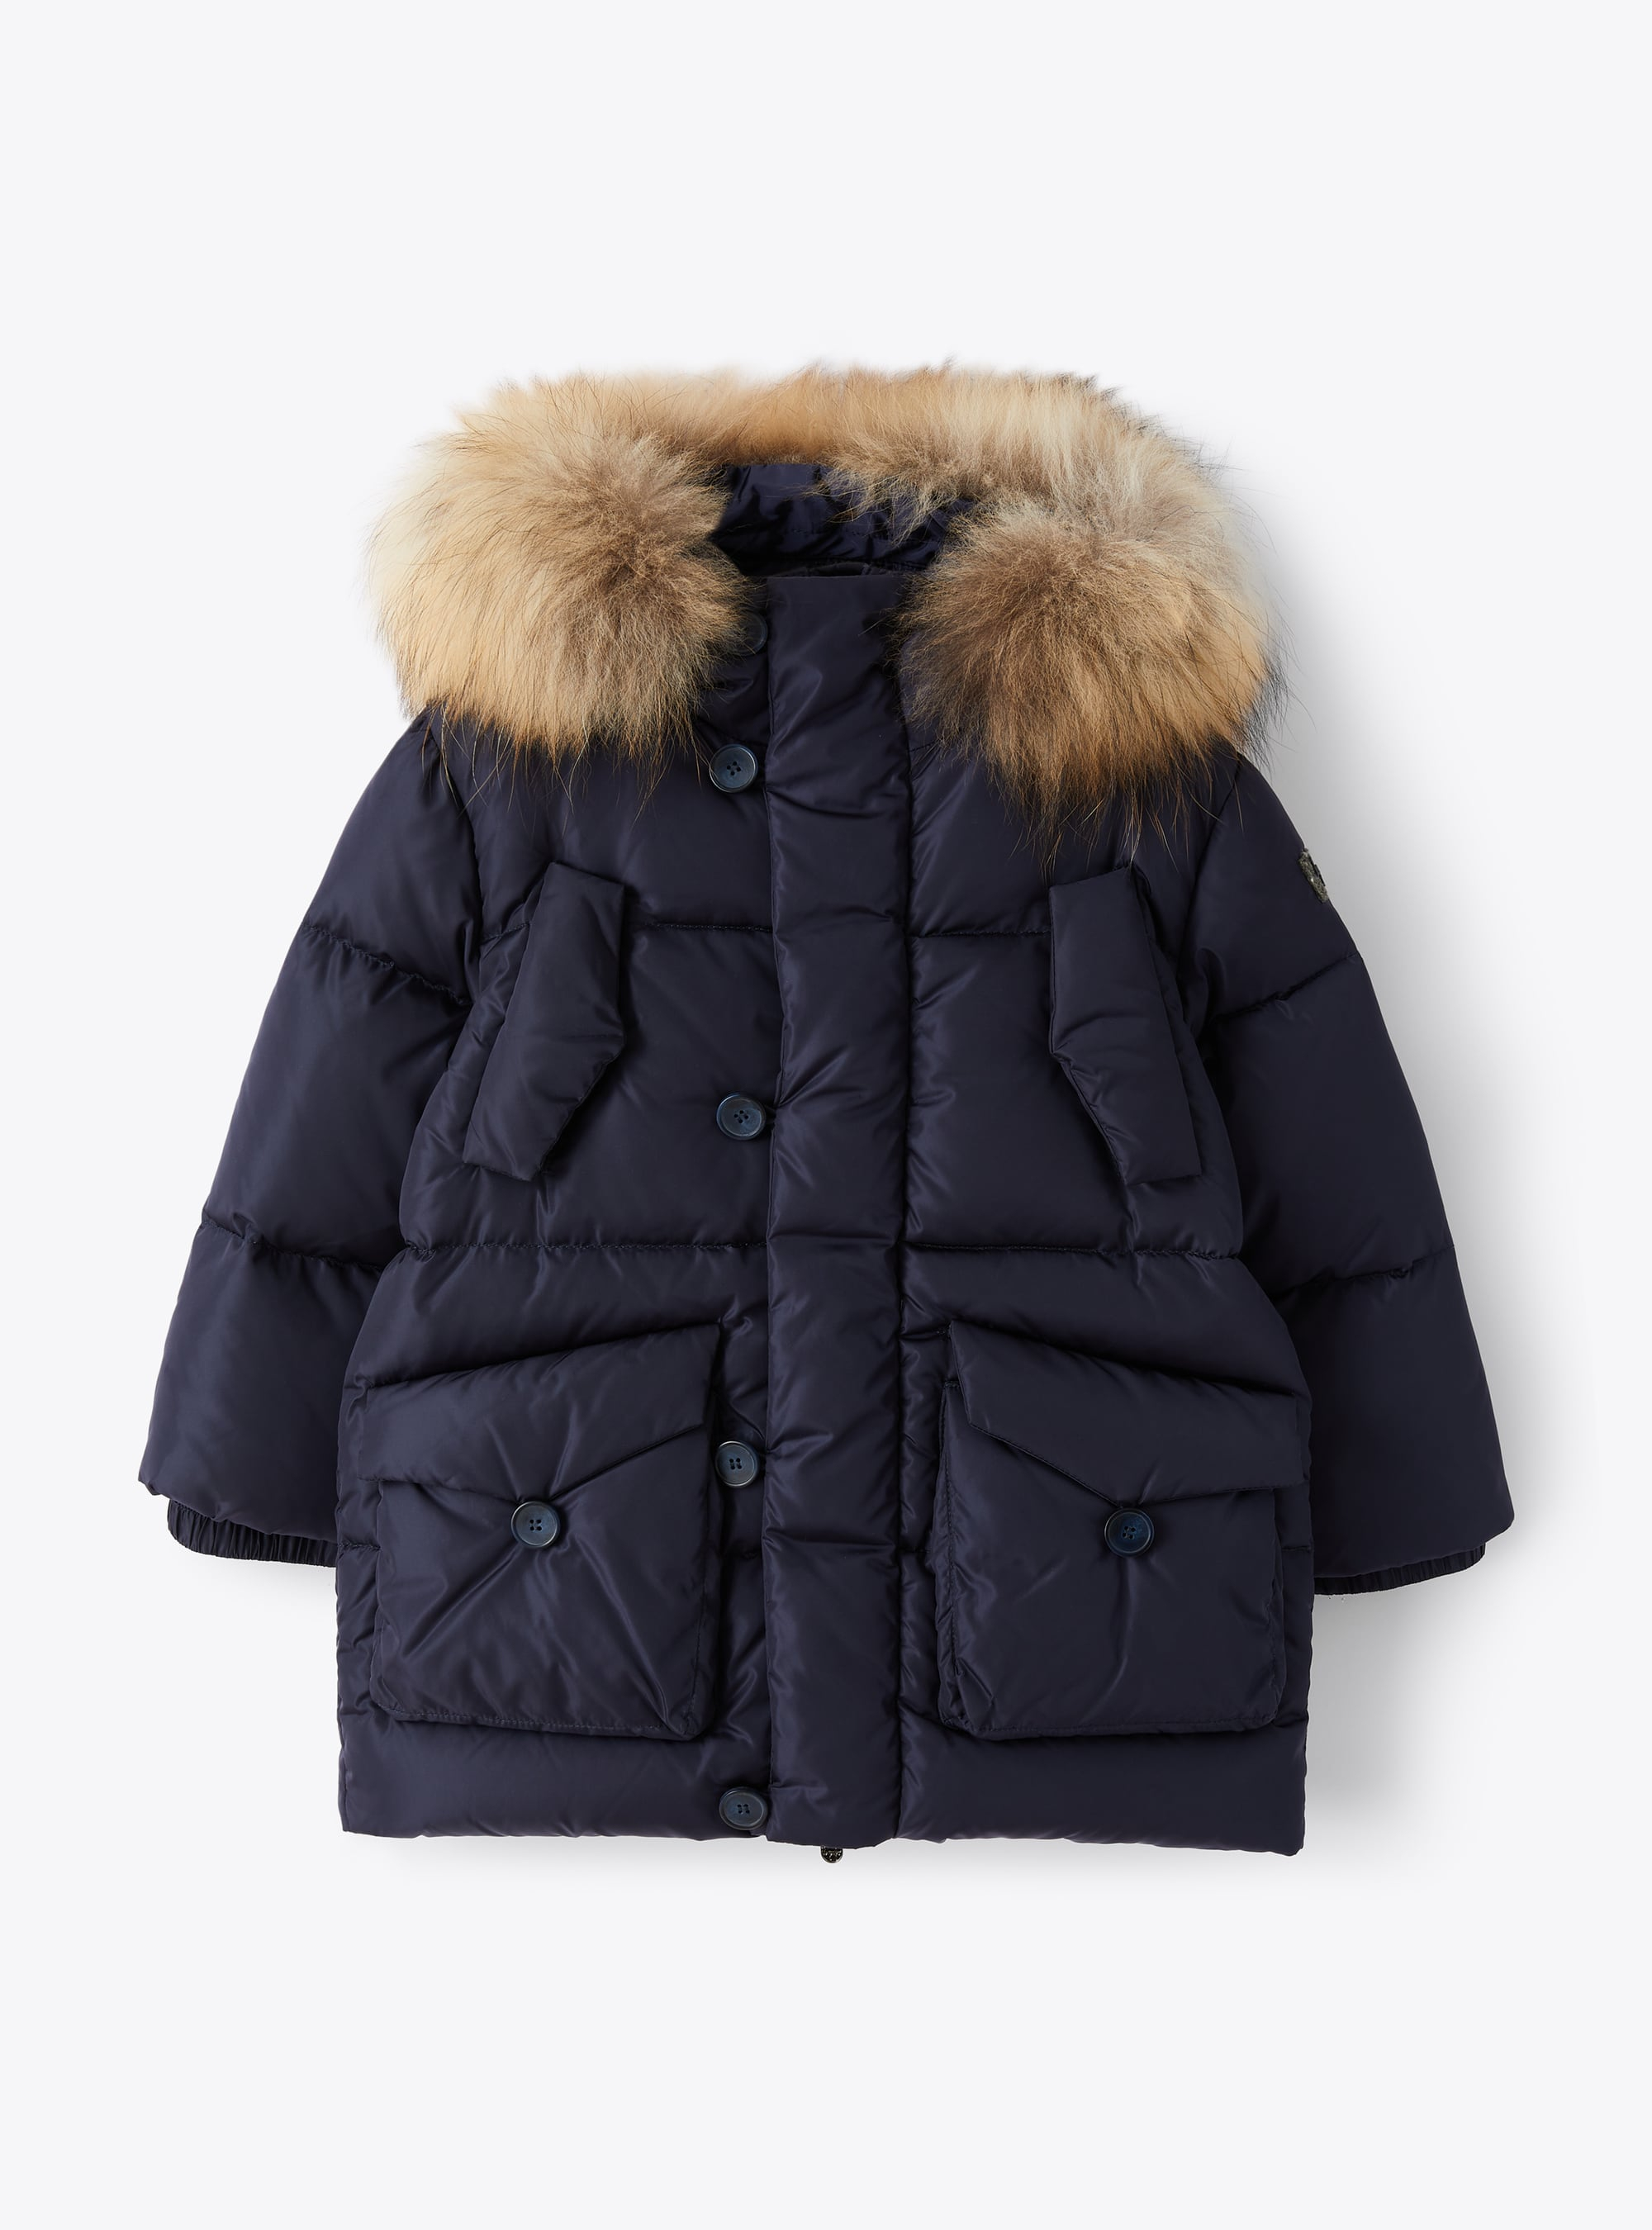 Longline down jacket in blue nylon taffeta with fur trim - Down Jackets - Il Gufo